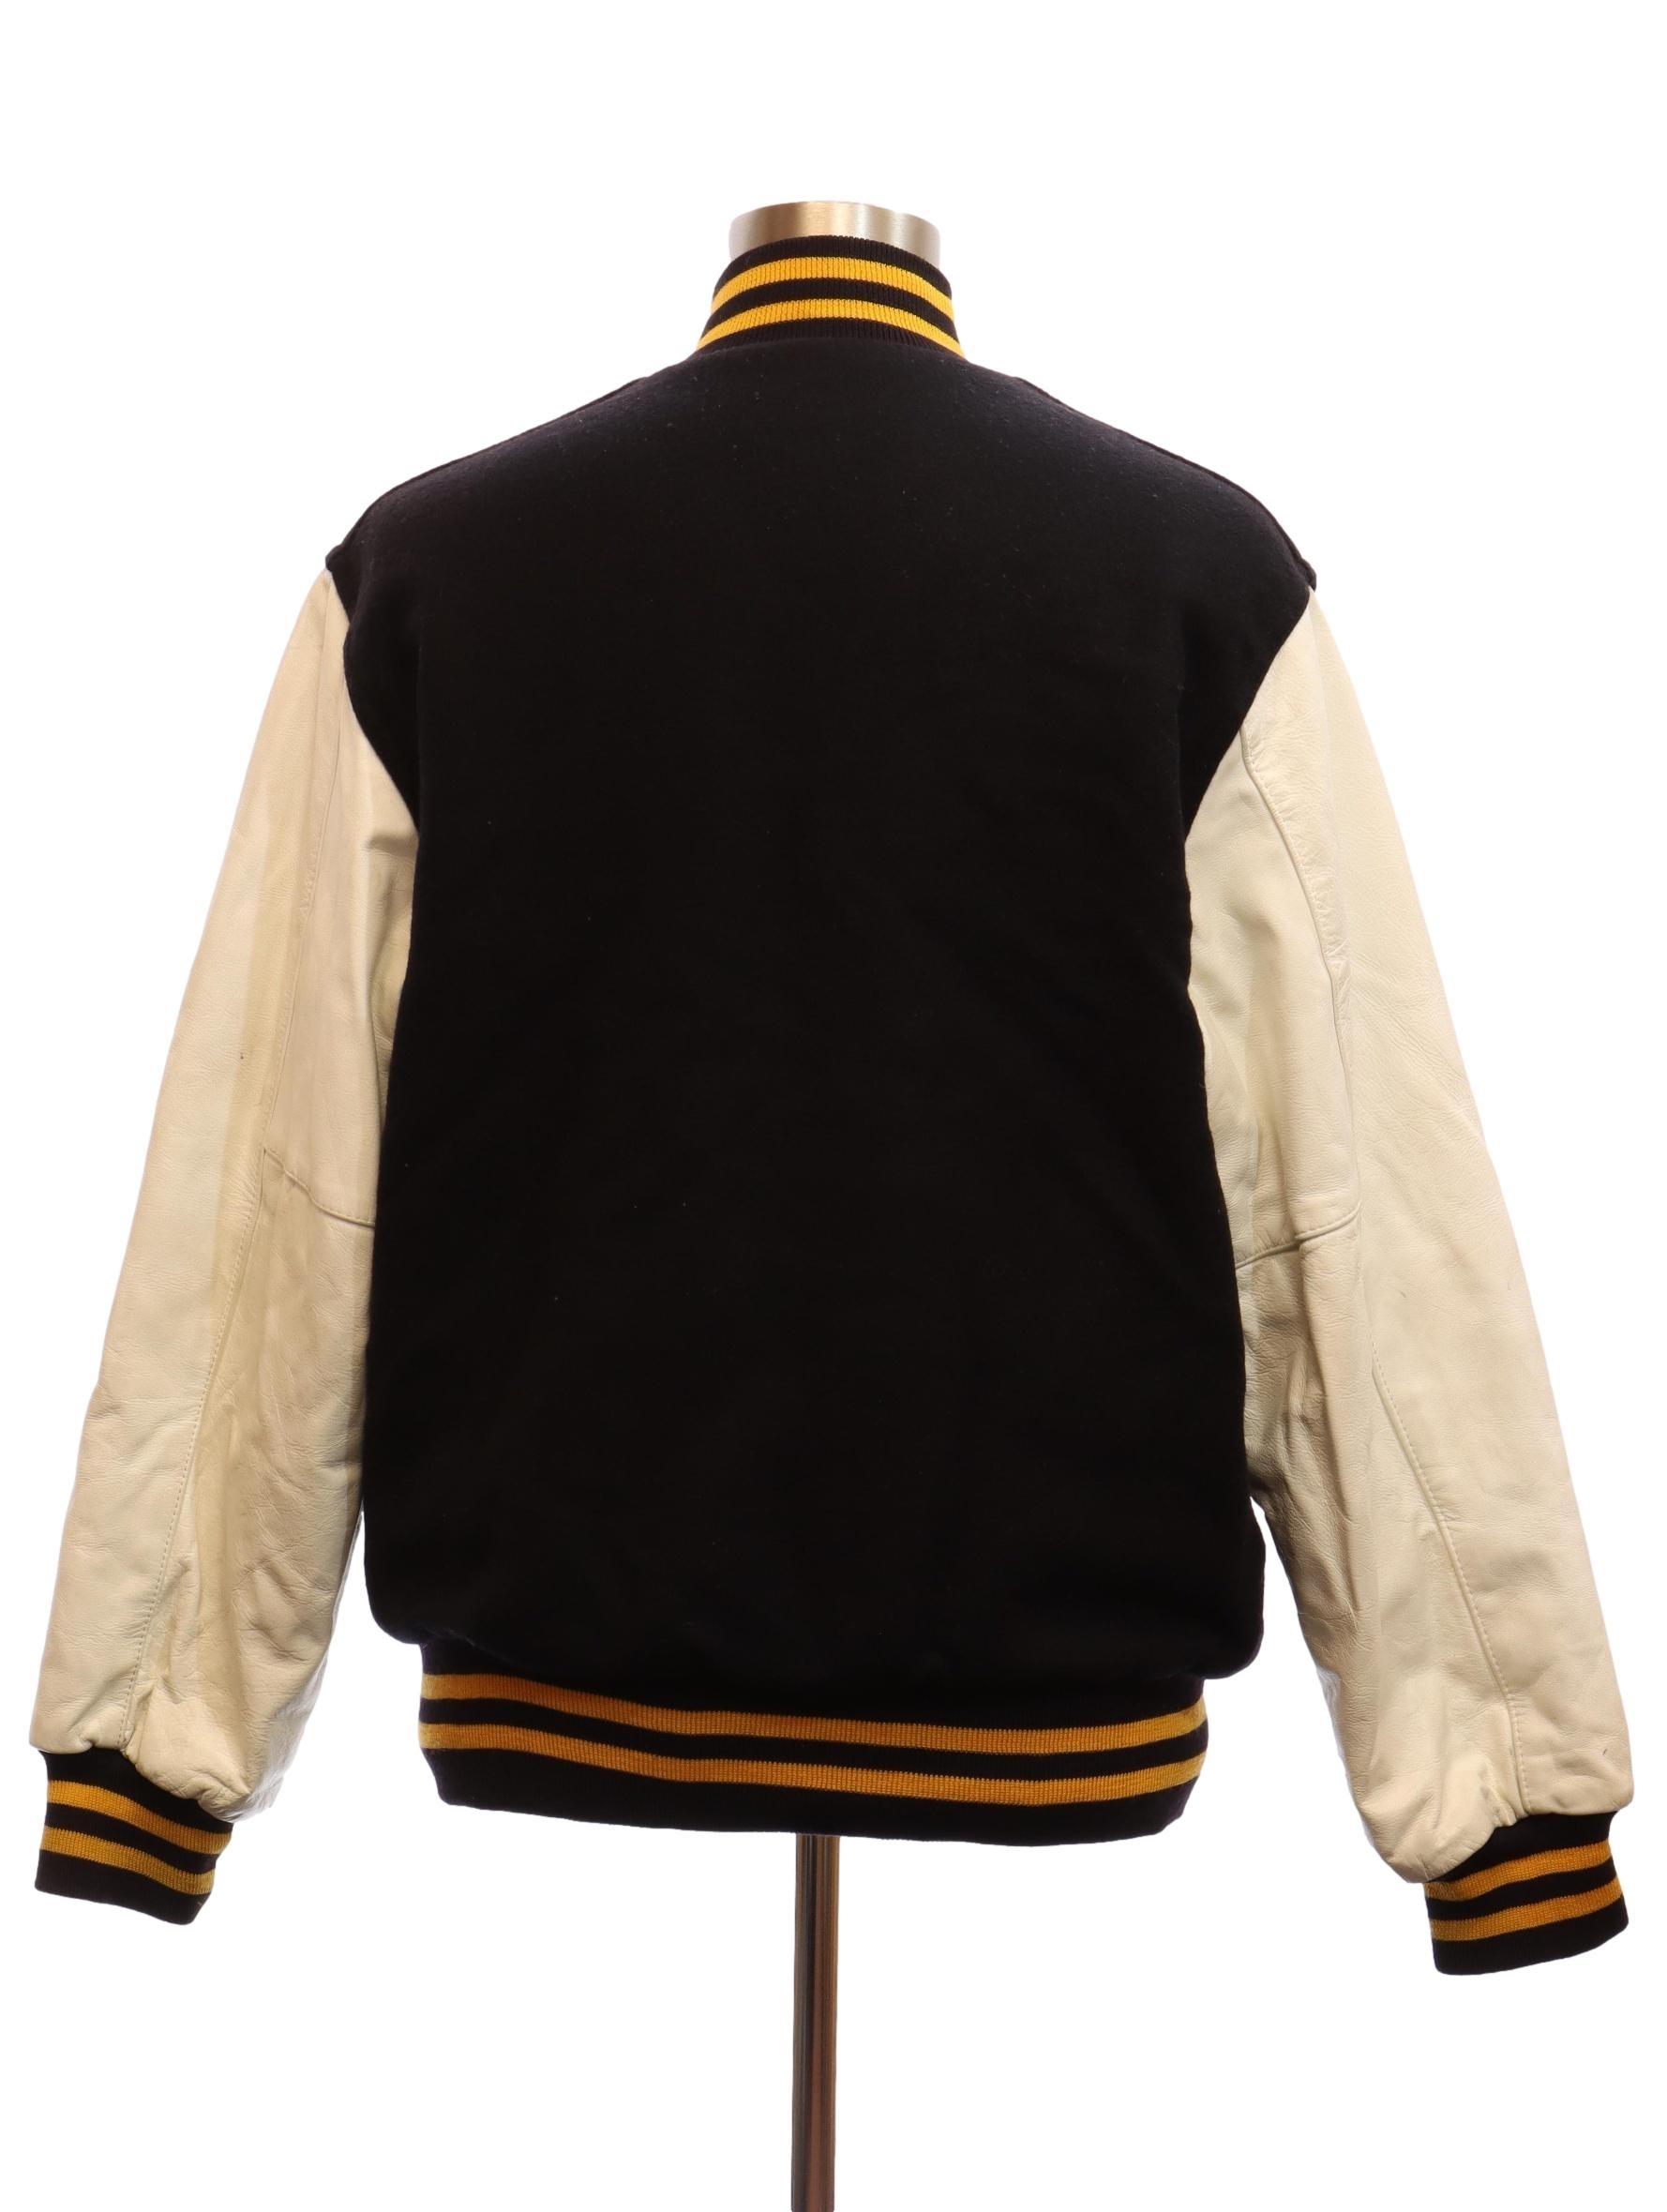 Men's Yellow Varsity Leather Jacket